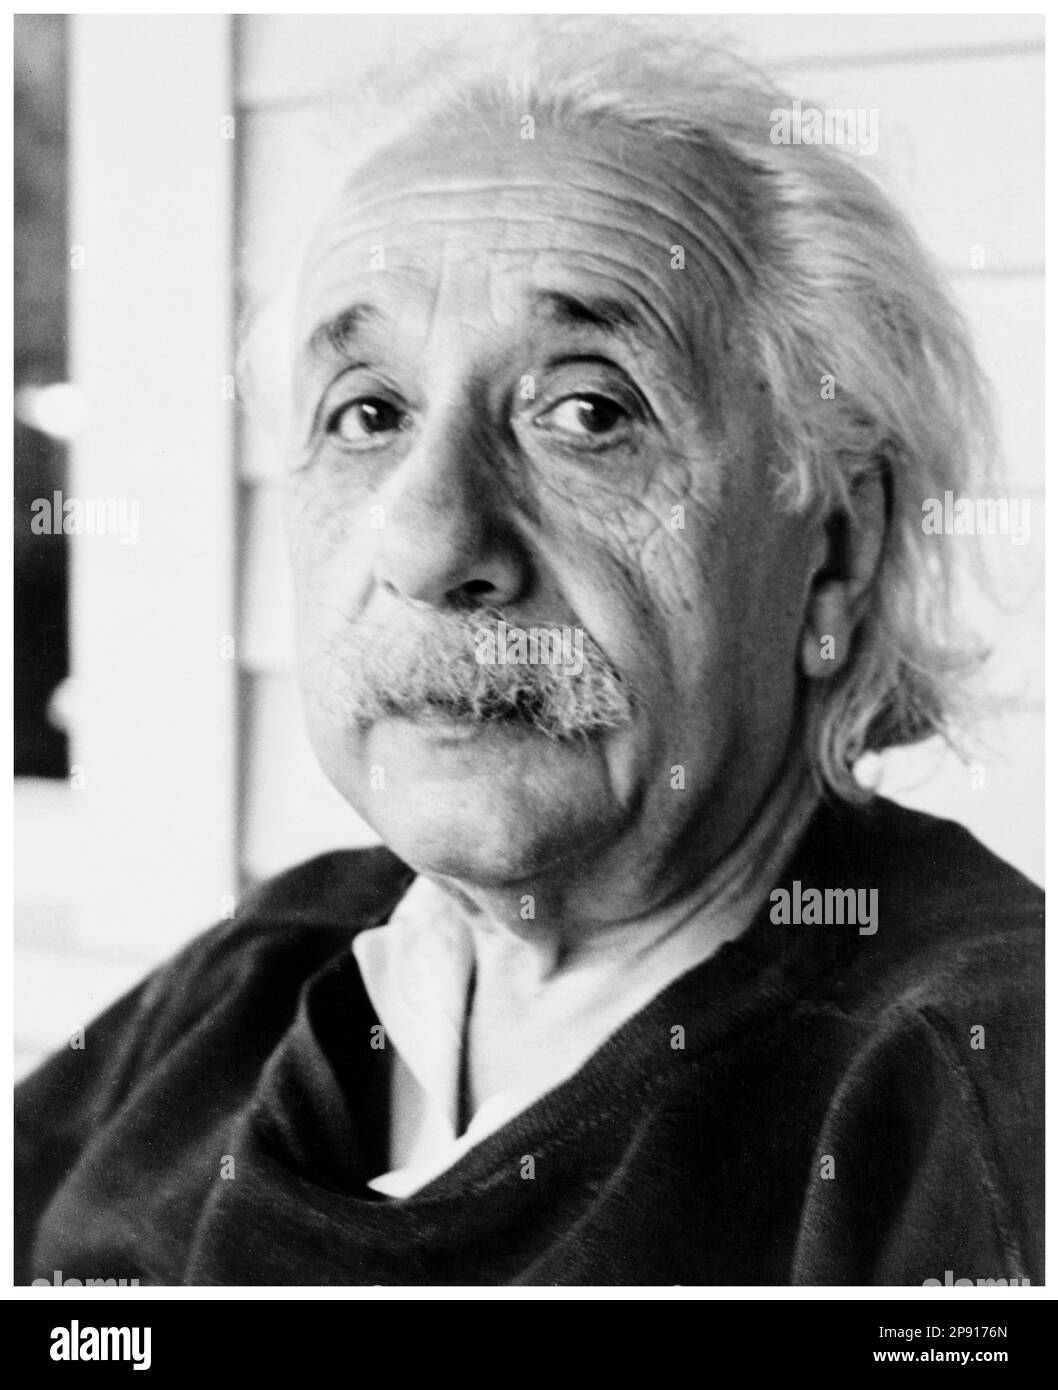 Albert Einstein (1879-1955), German born theoretical physicist, portrait photograph by John D Schiff, circa 1945 Stock Photo